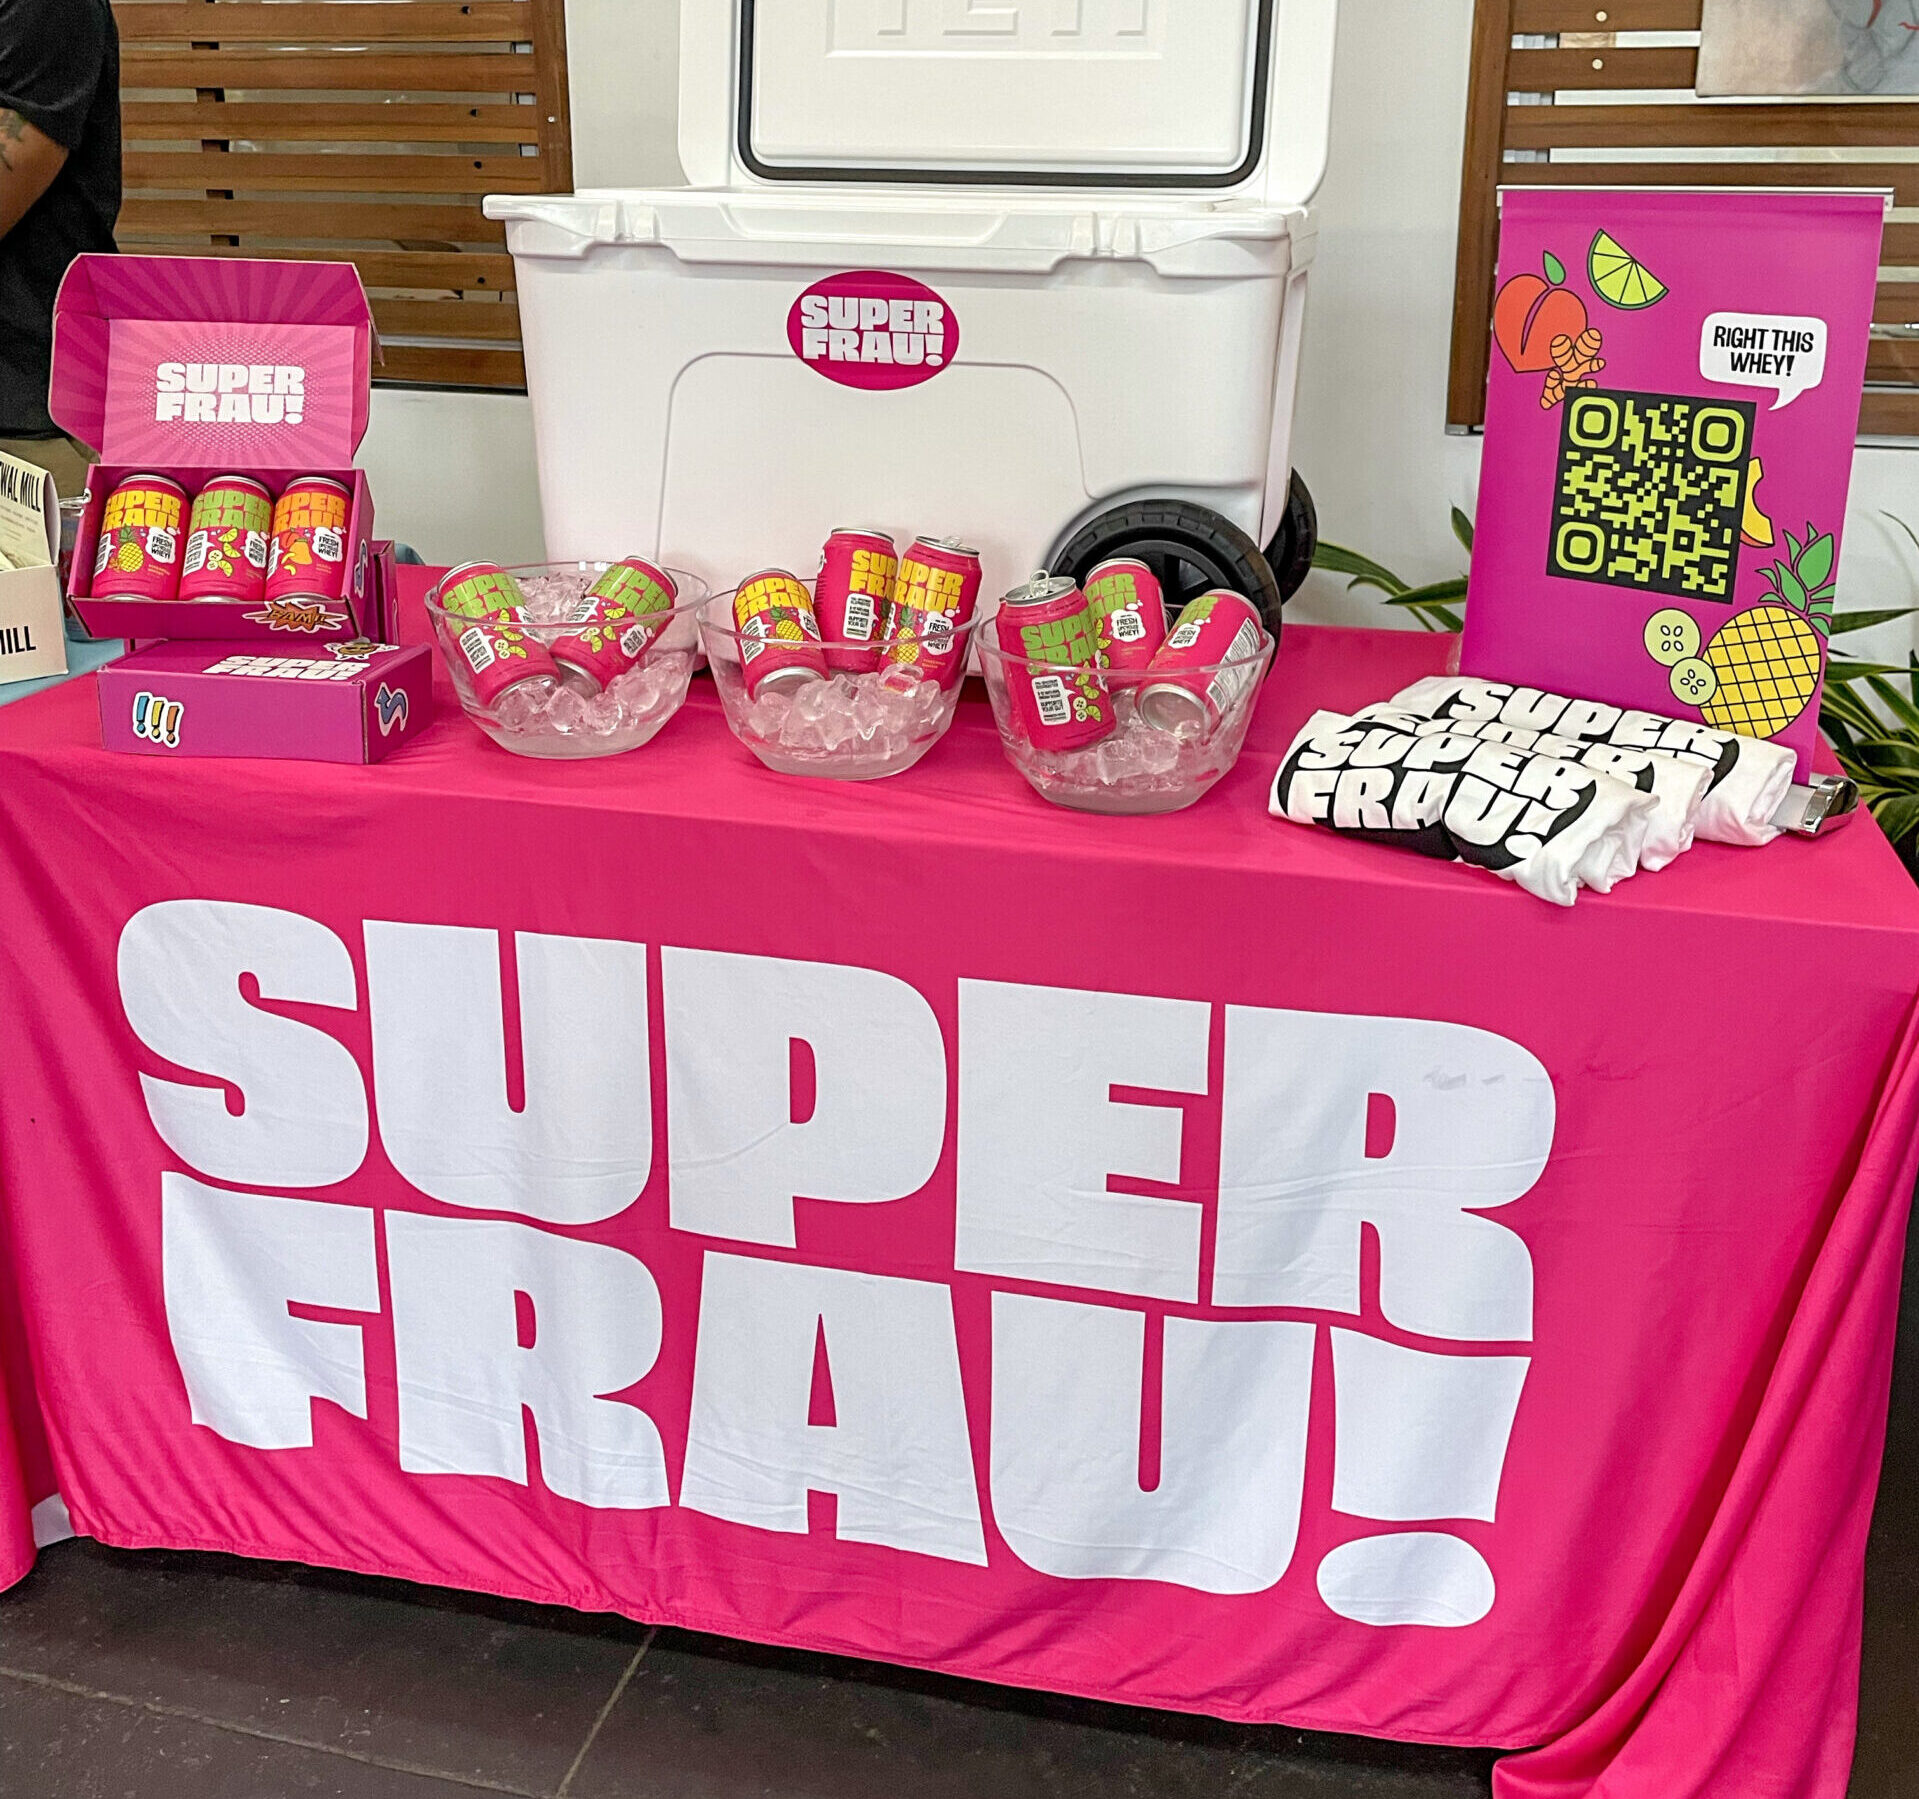 Super Frau! Sparking Whey Drink Booth from Tastebase Snack Fair